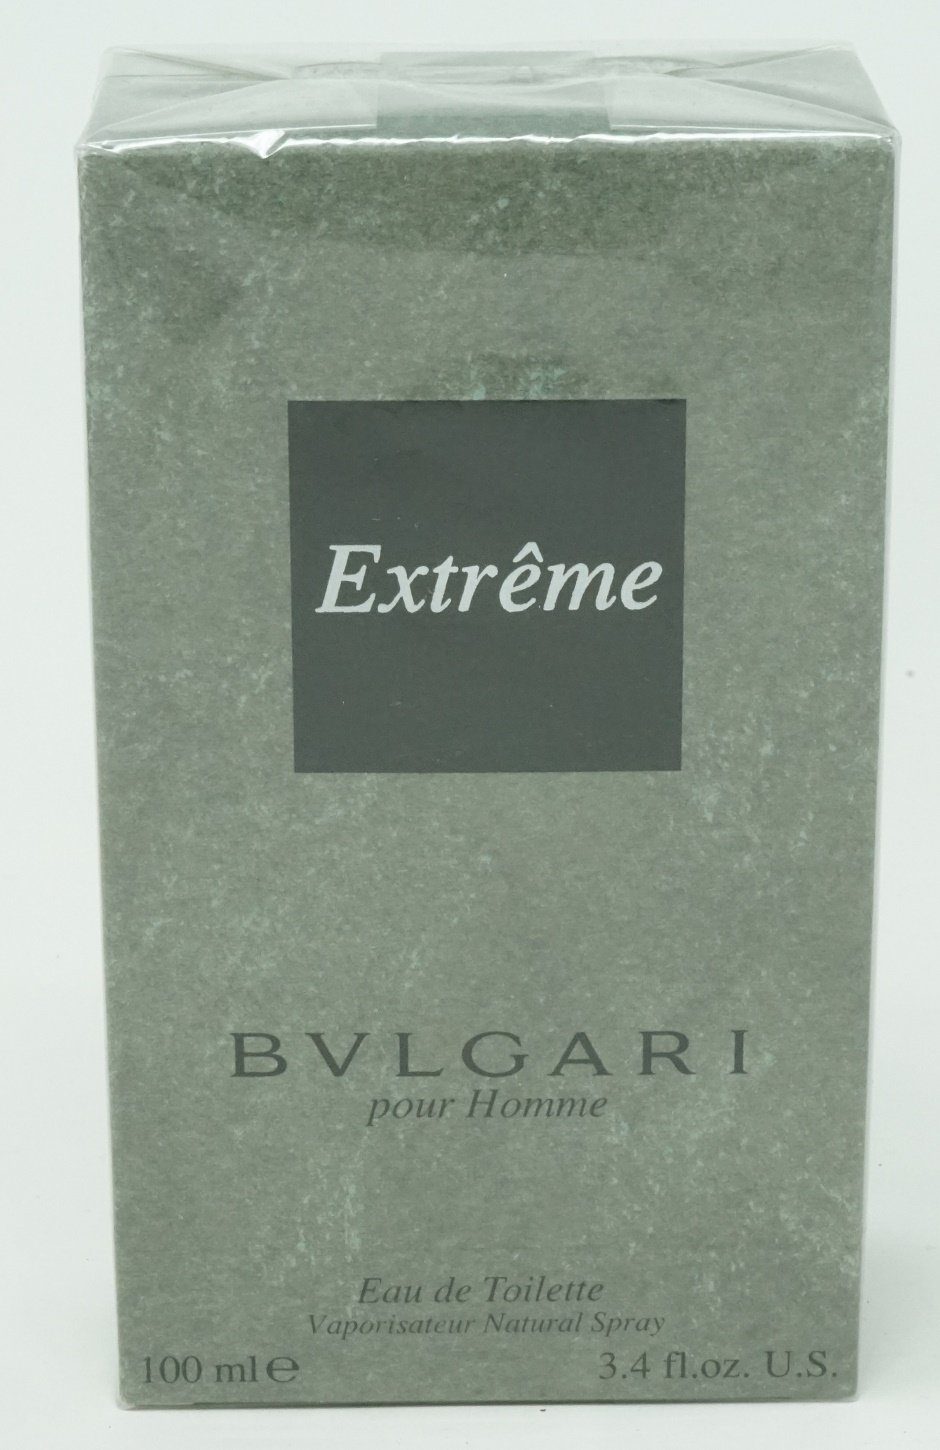 BVLGARI 100 Pour Toilette Bvlgari Spray Homme Extreme de ml Toilette Eau de Eau